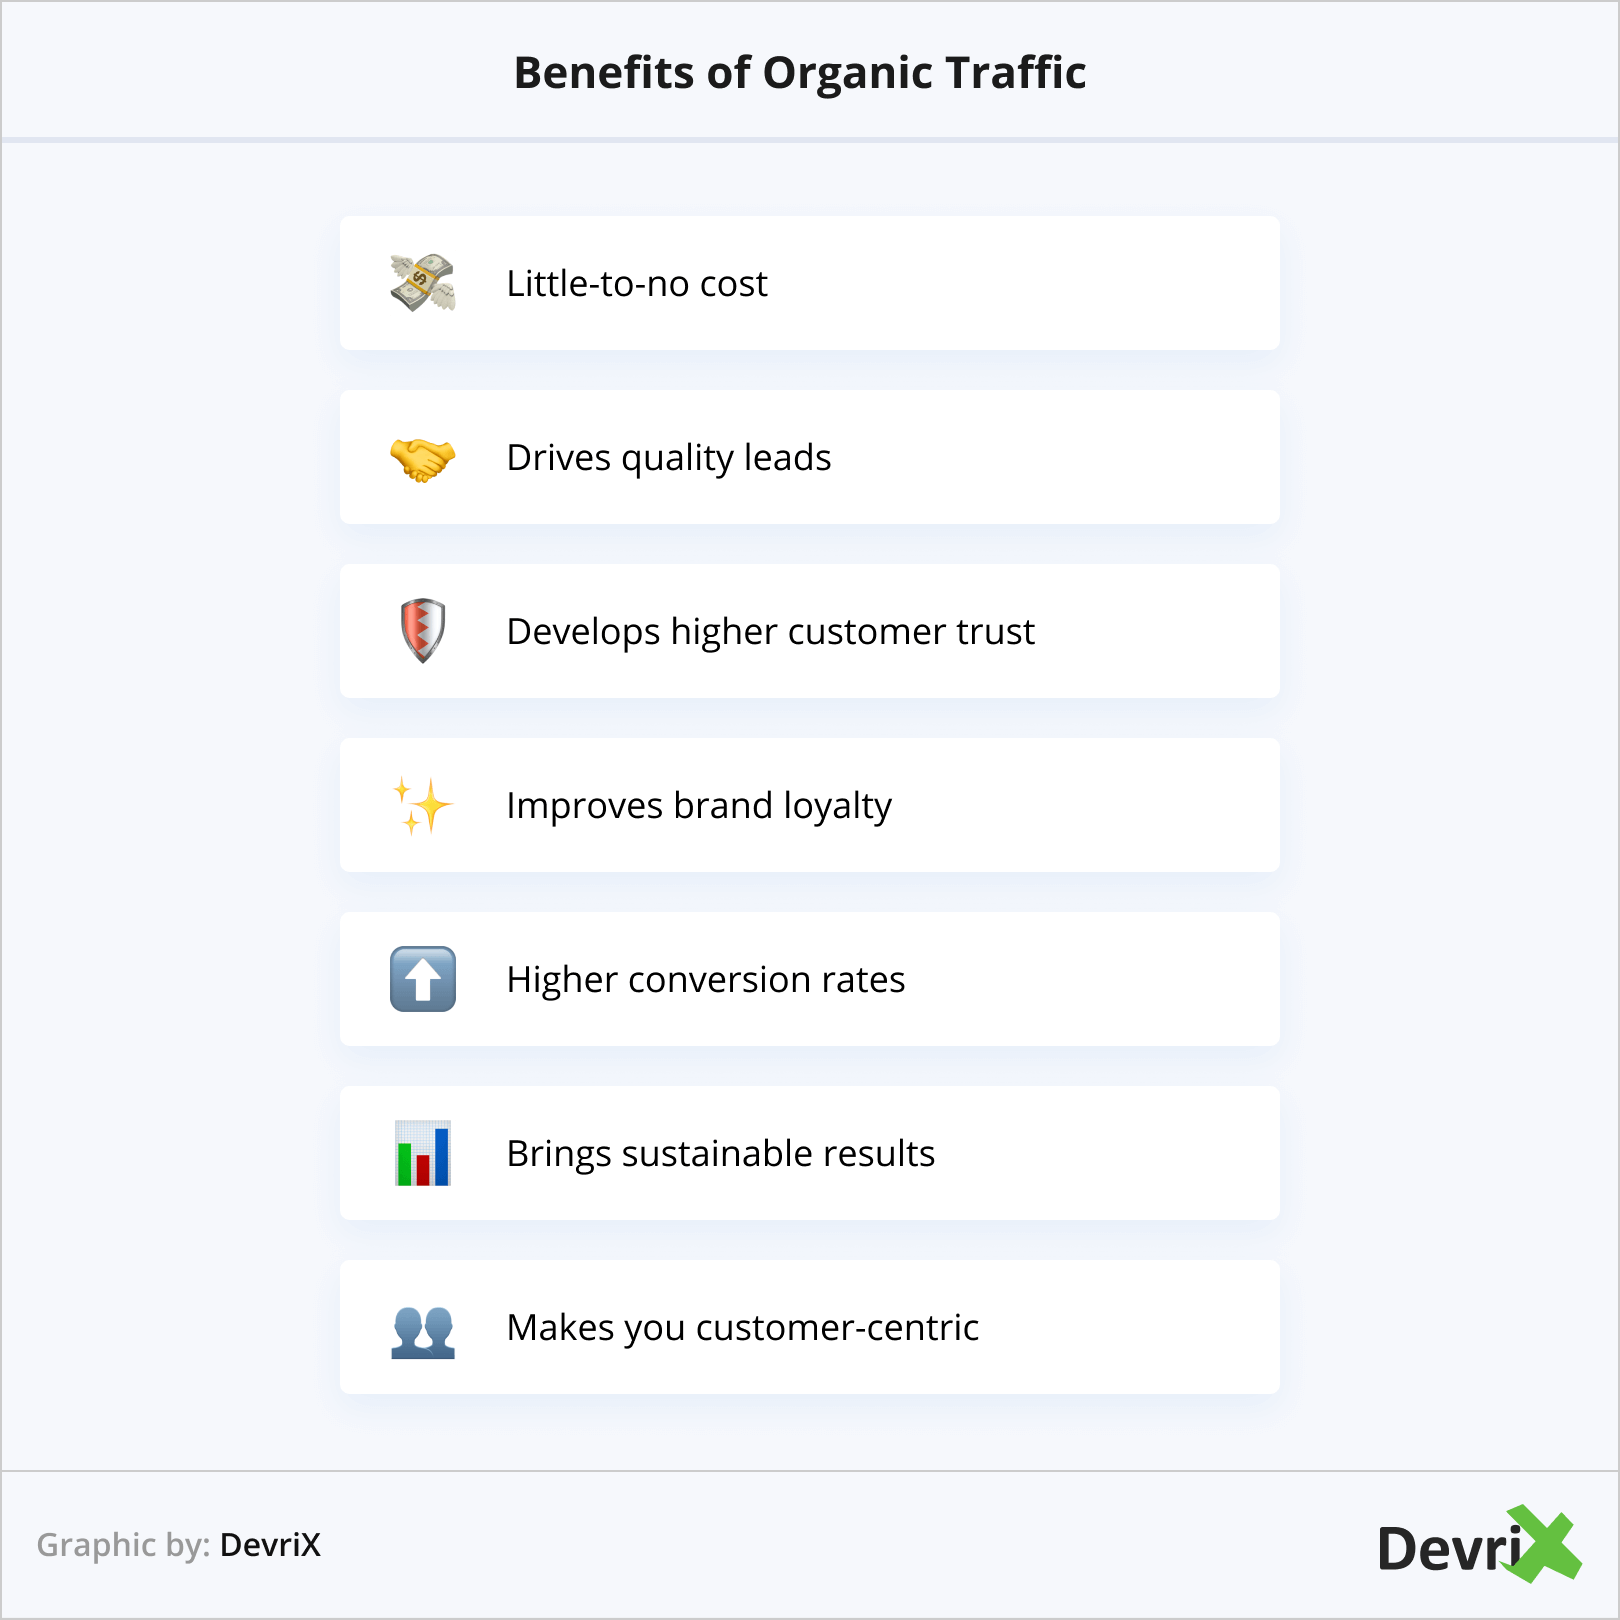 Benefits of Organic Traffic